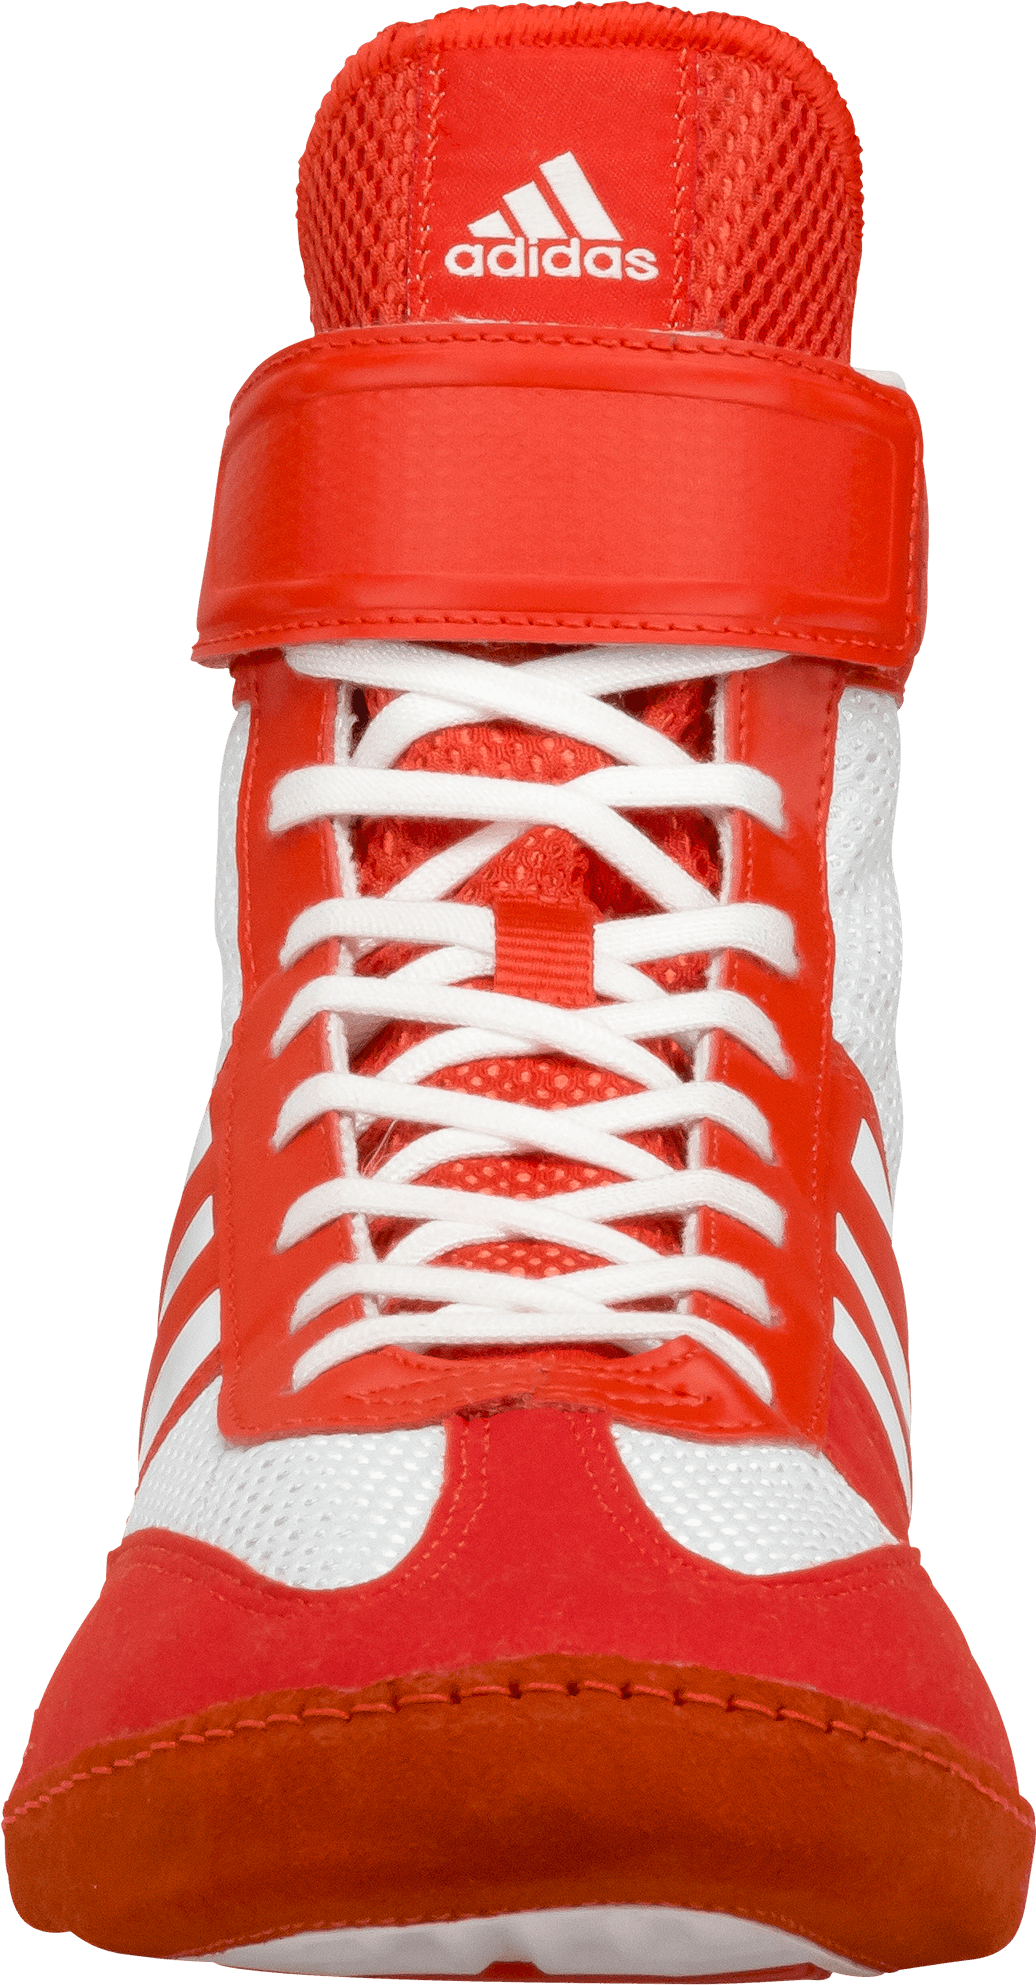 A Close Up Of A Shoe